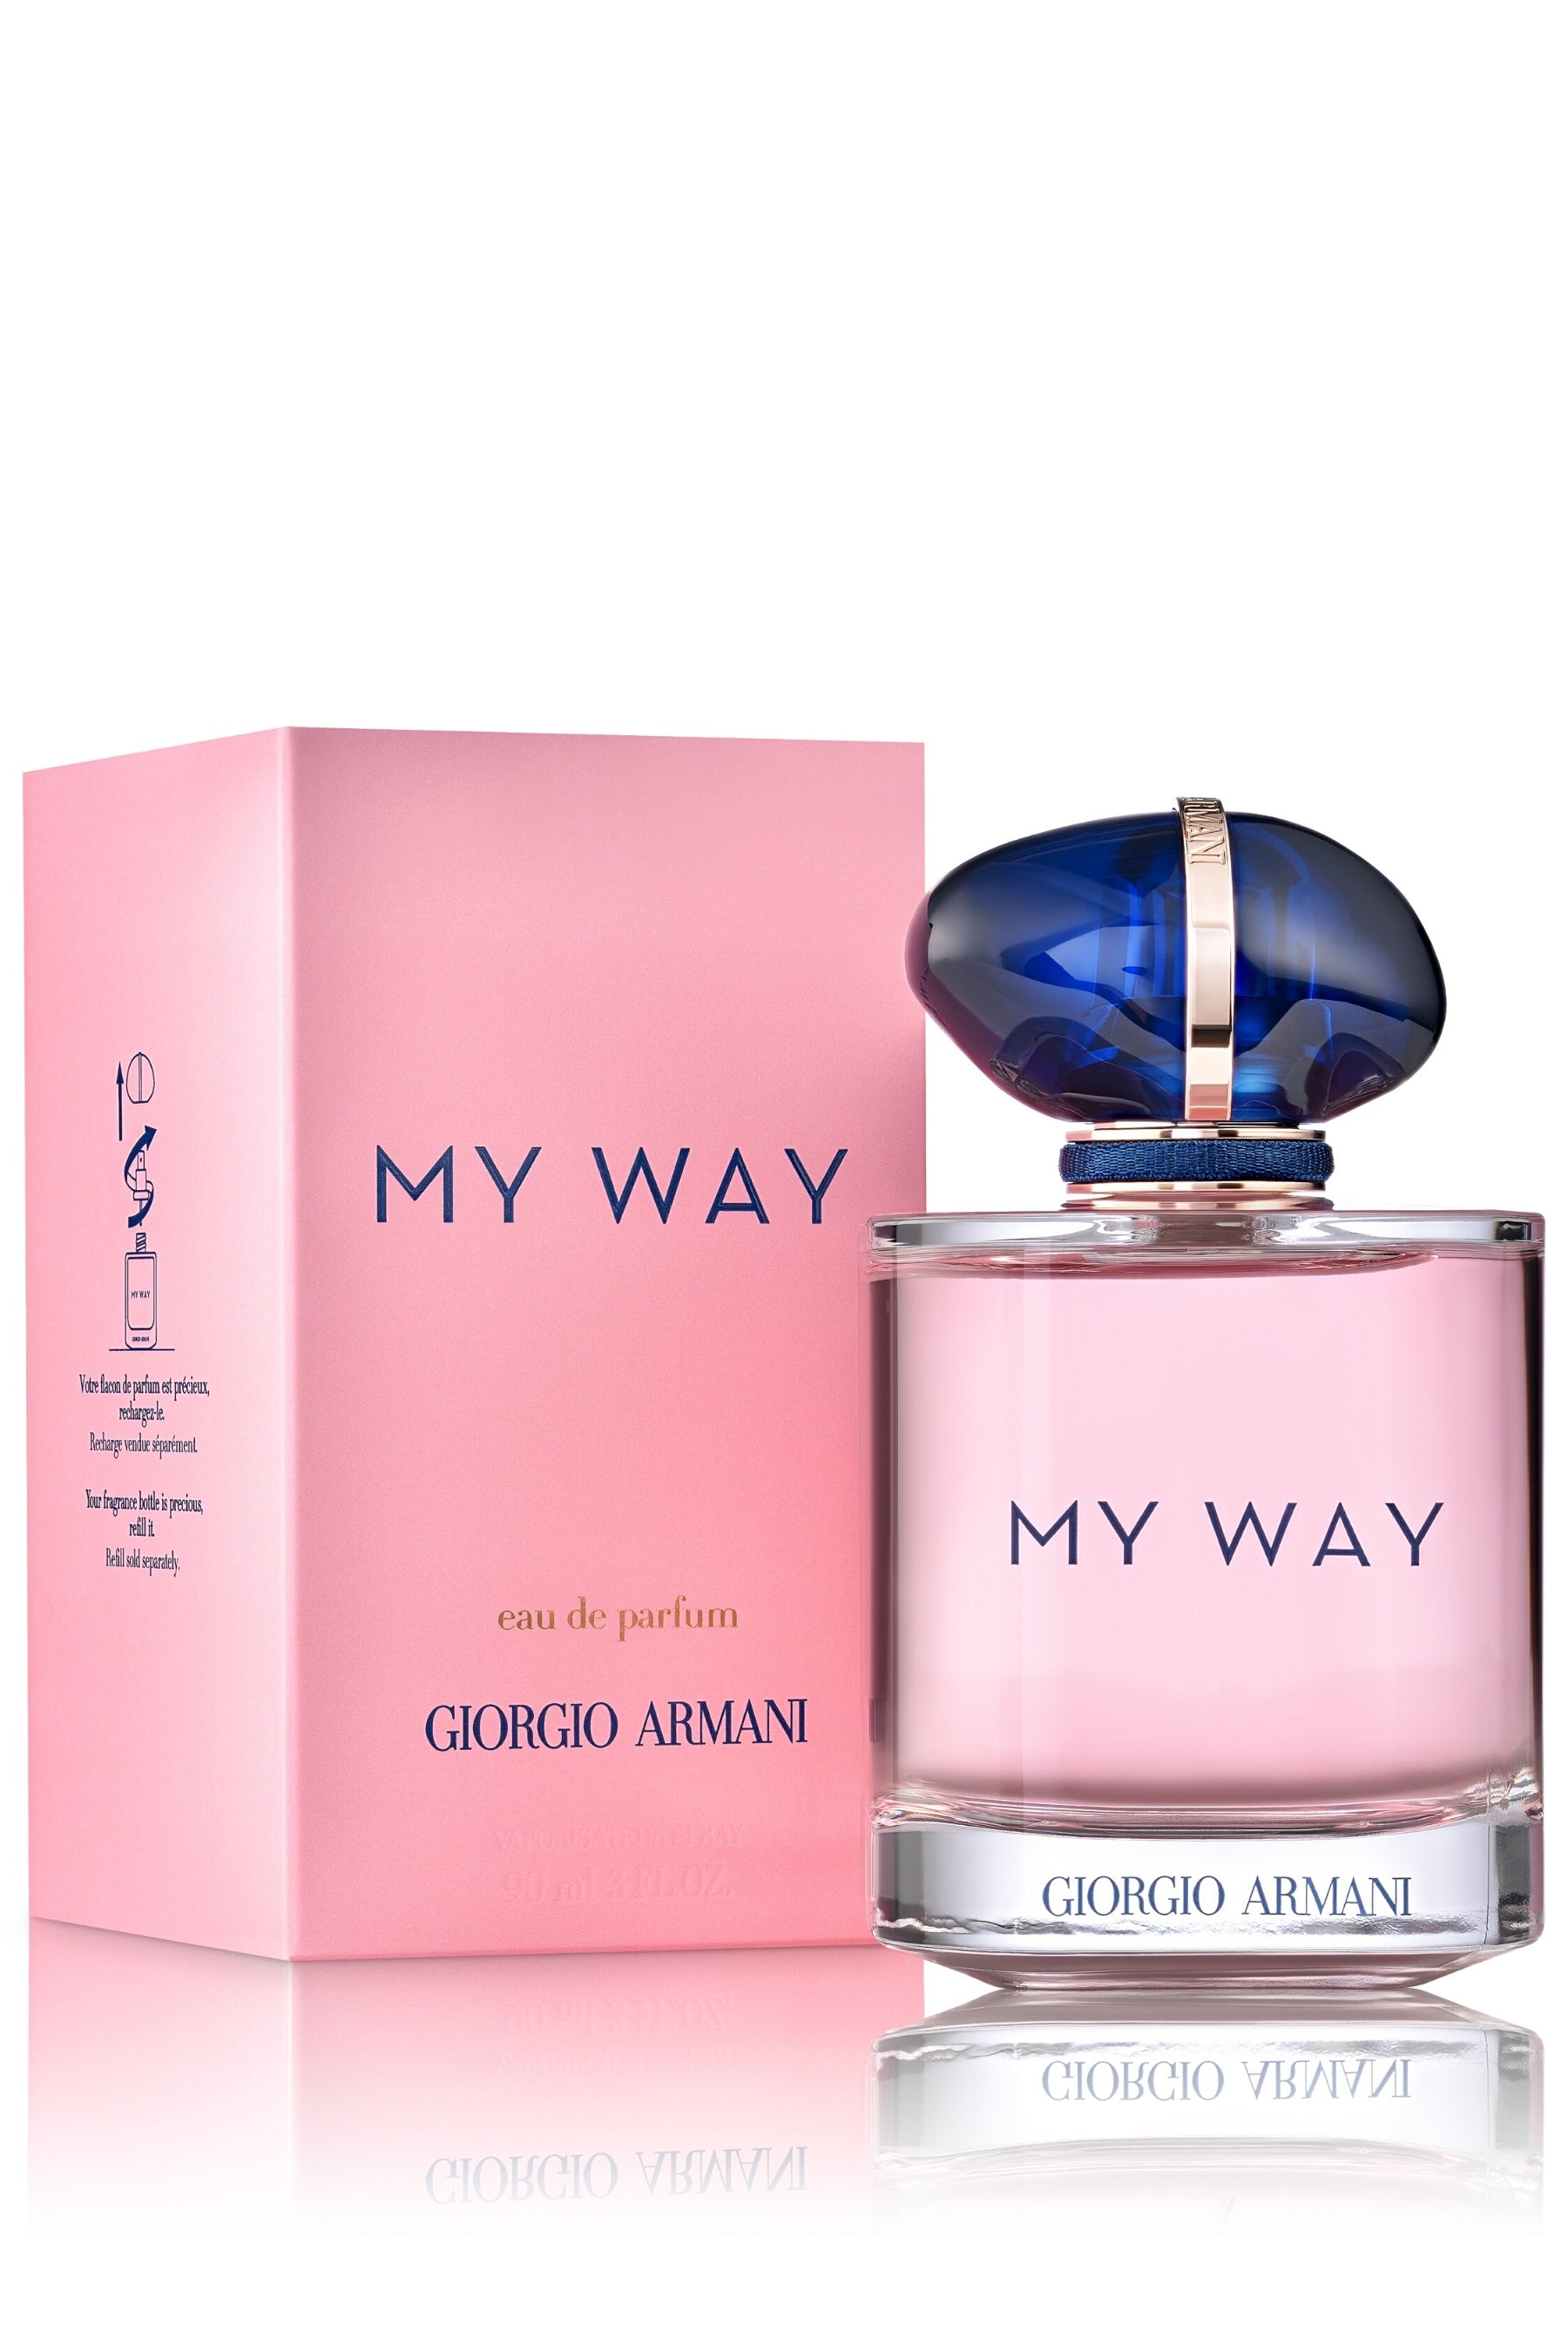 Giorgio Armani Perfume & Aftershave, Latest Releases